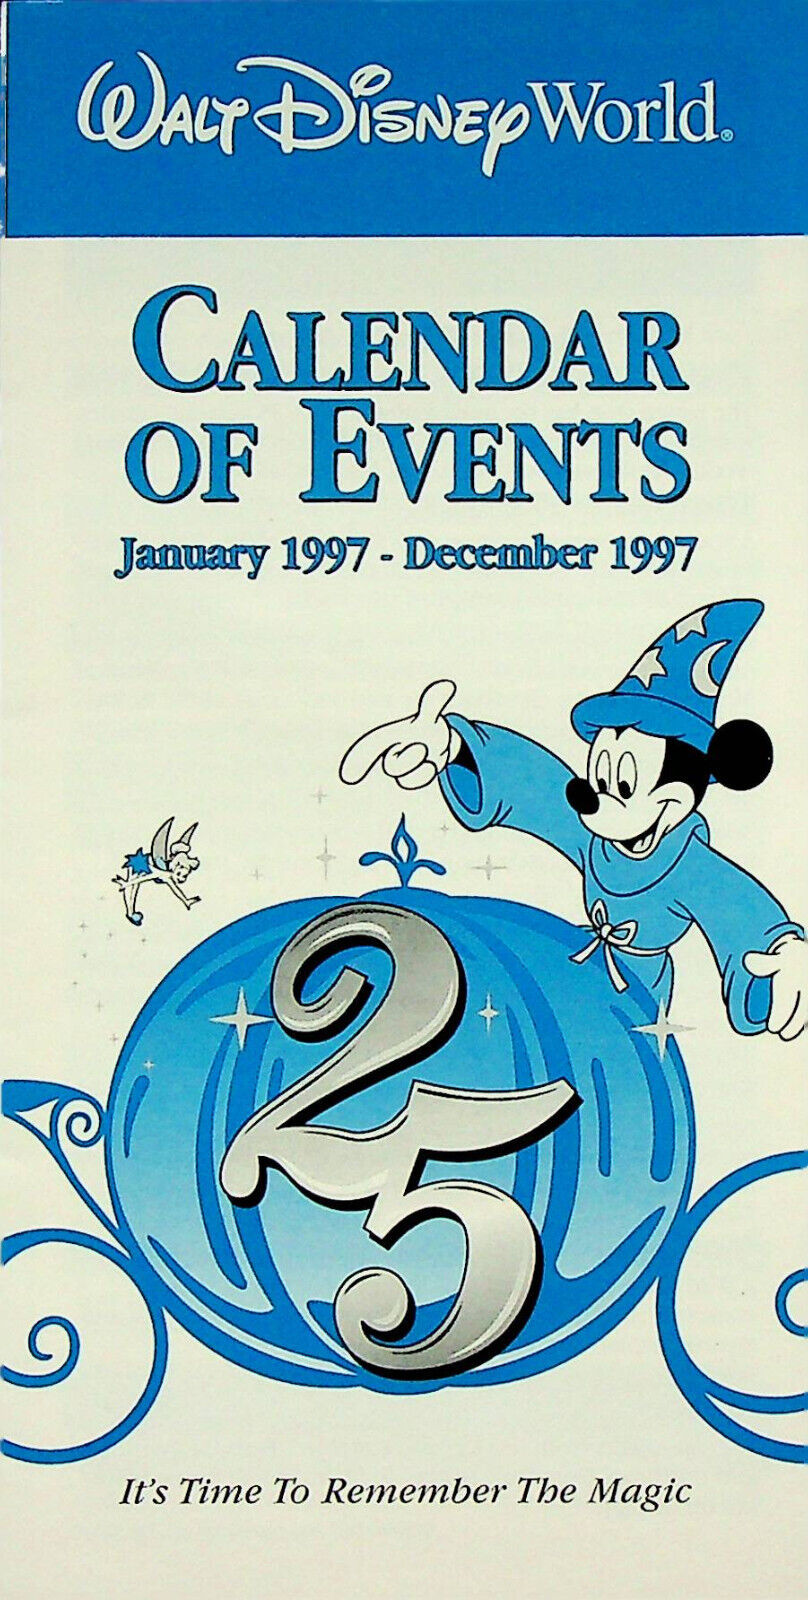 Walt Disney World Calendar of Events (1997) - 25th Anniversary - Pre-owned - $9.49